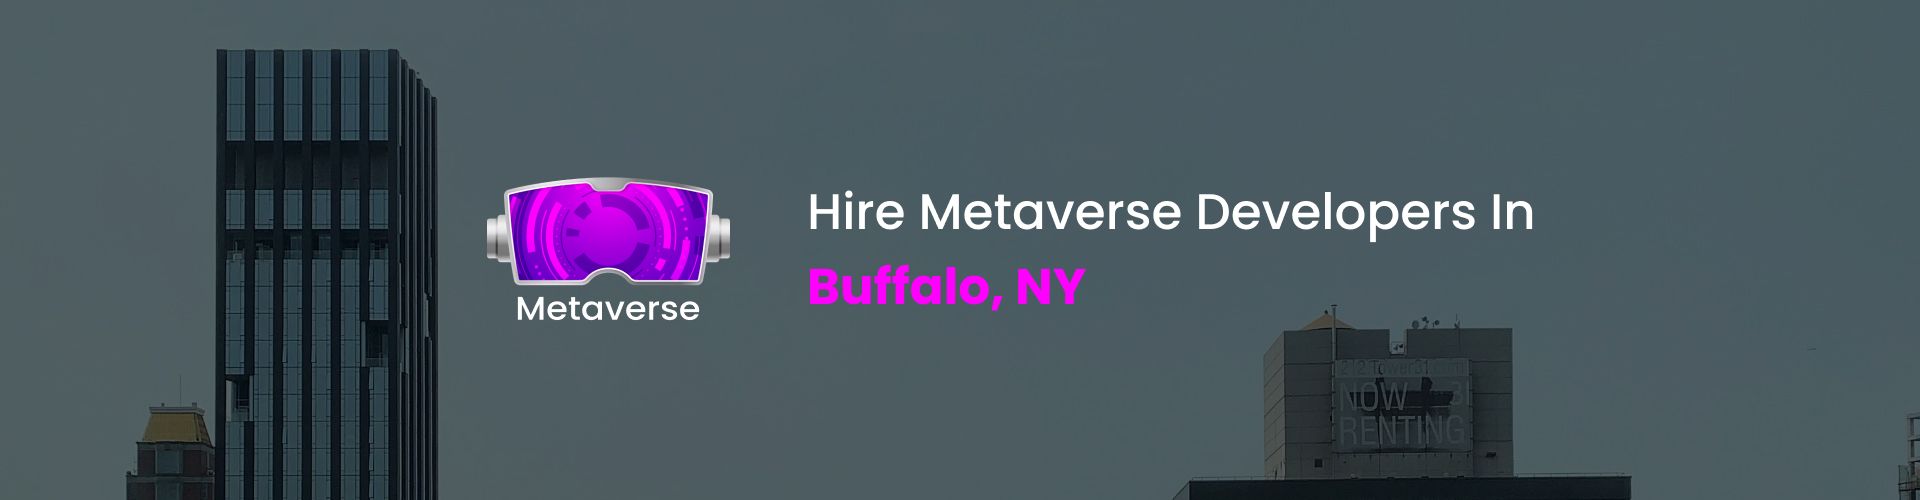 metaverse developers in buffalo